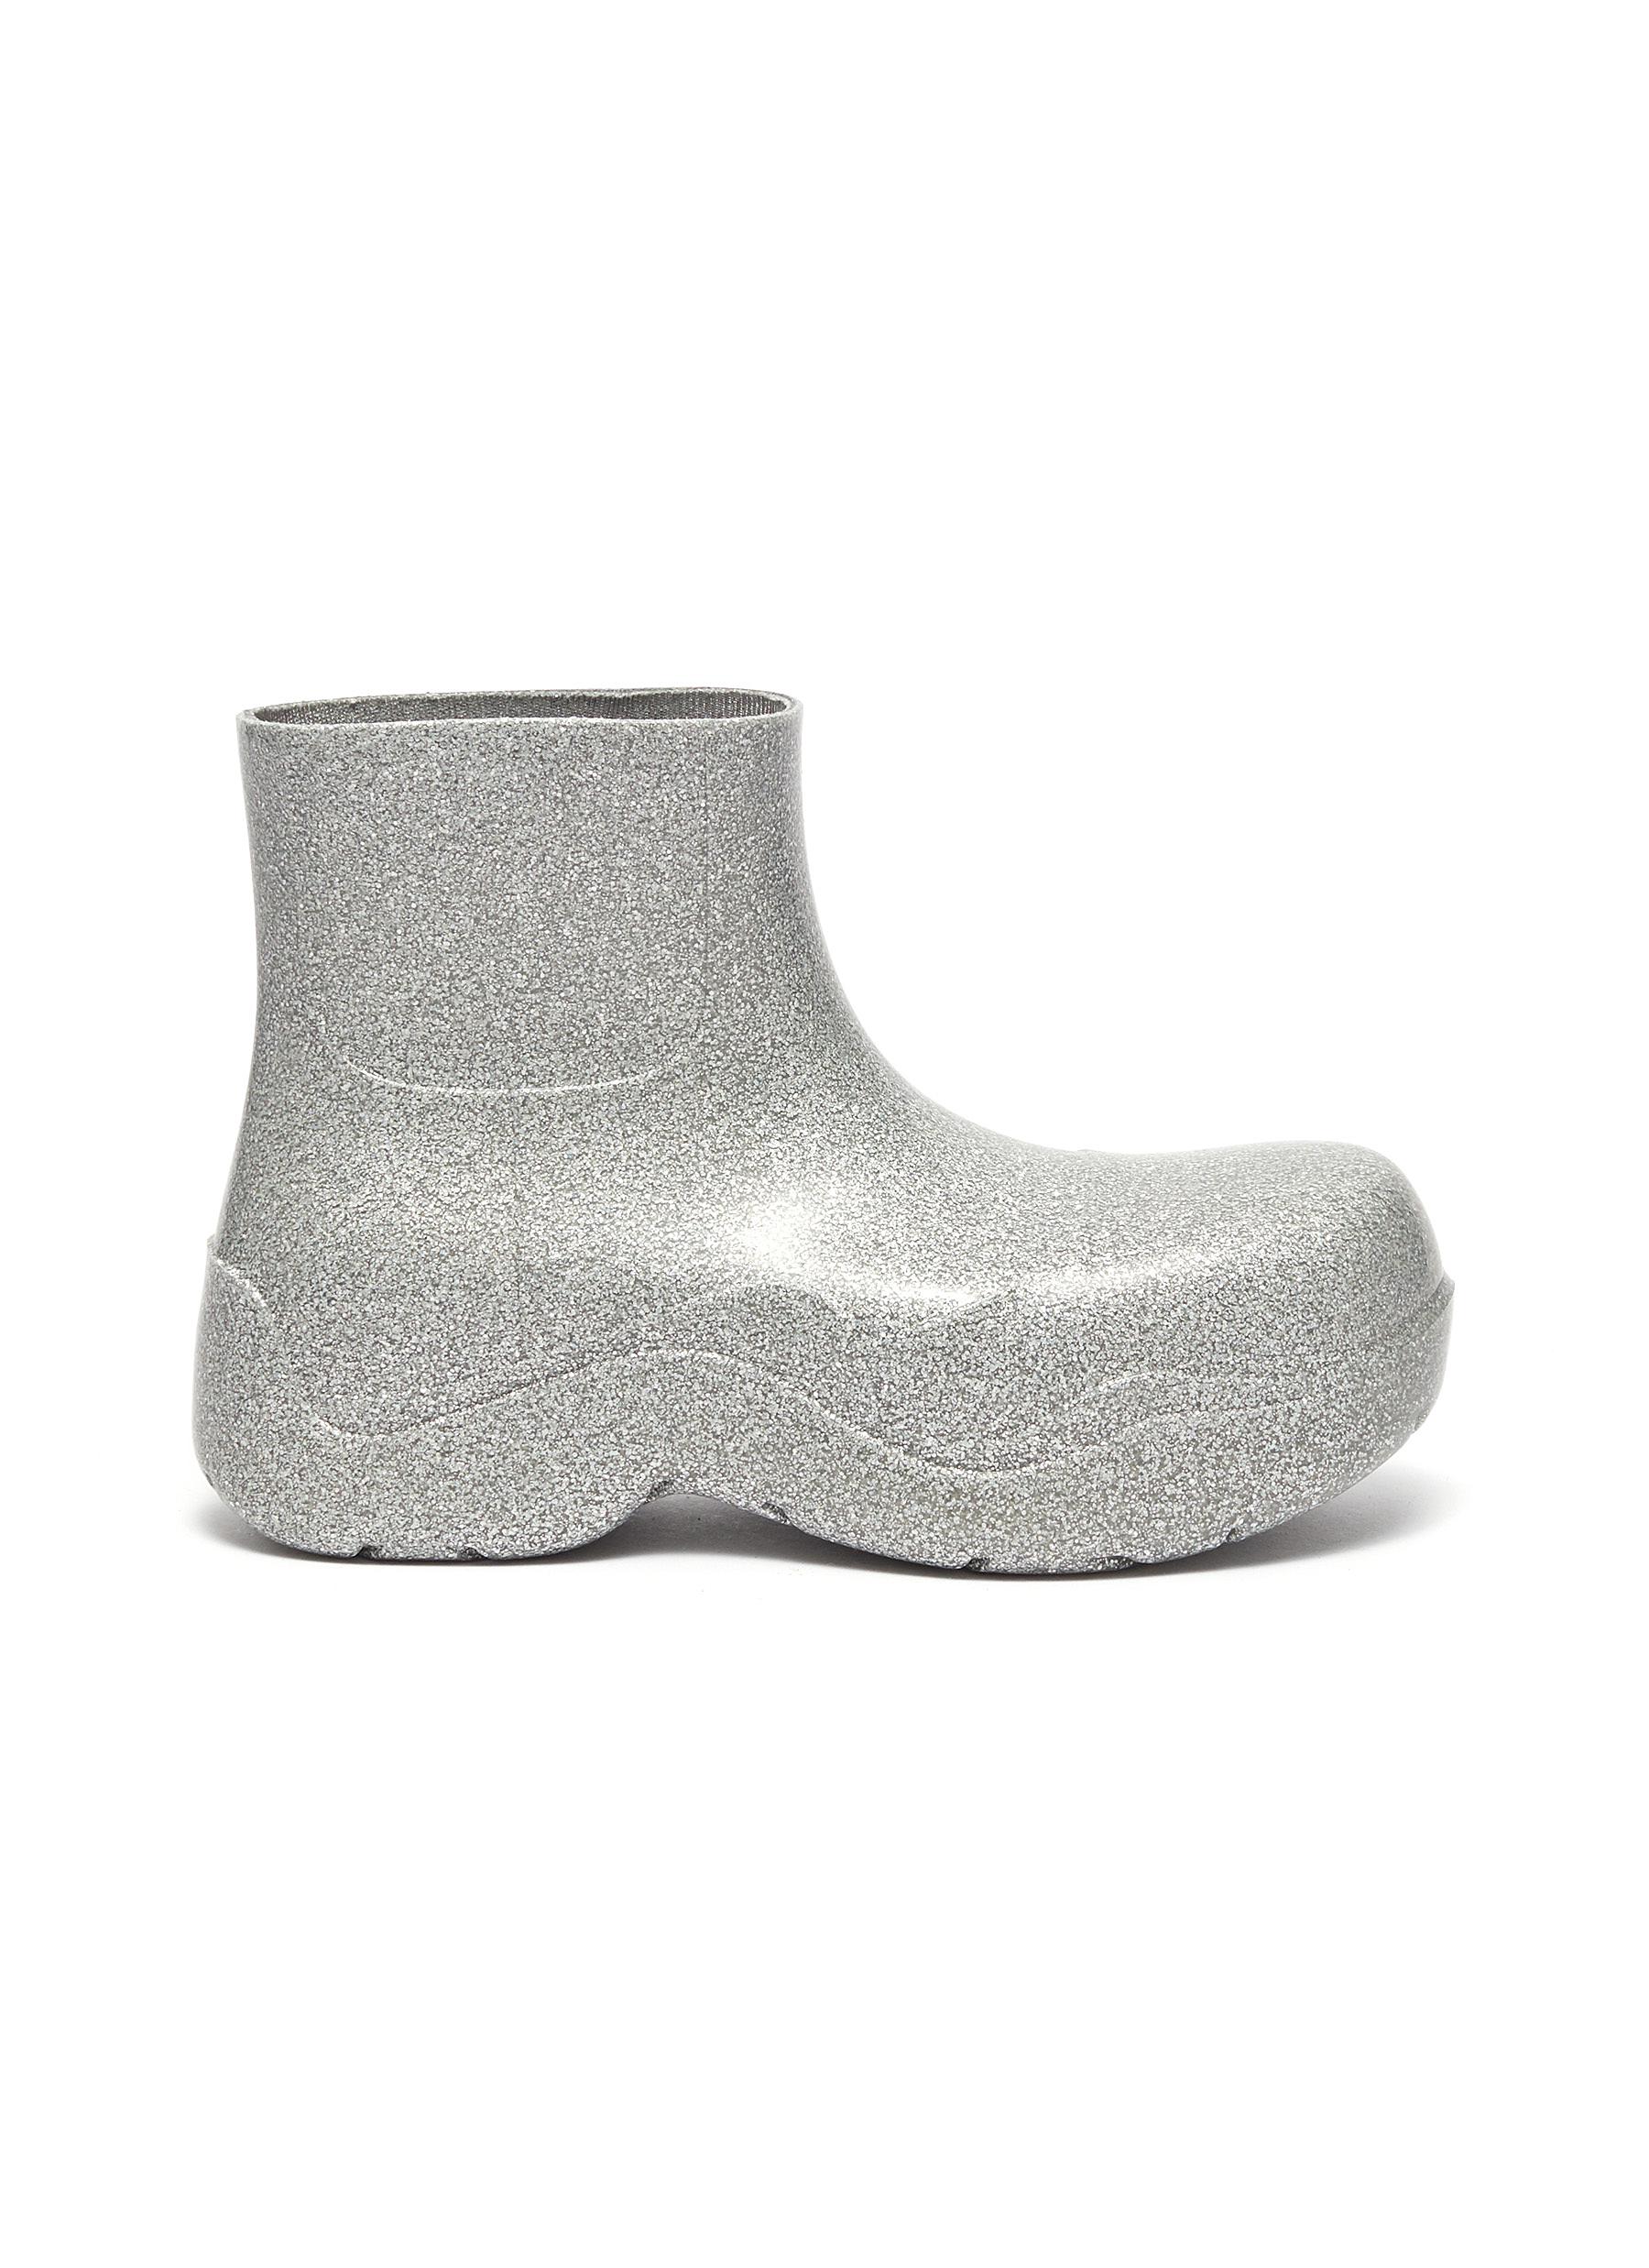 Puddle’ Sparkle Rubber Boots